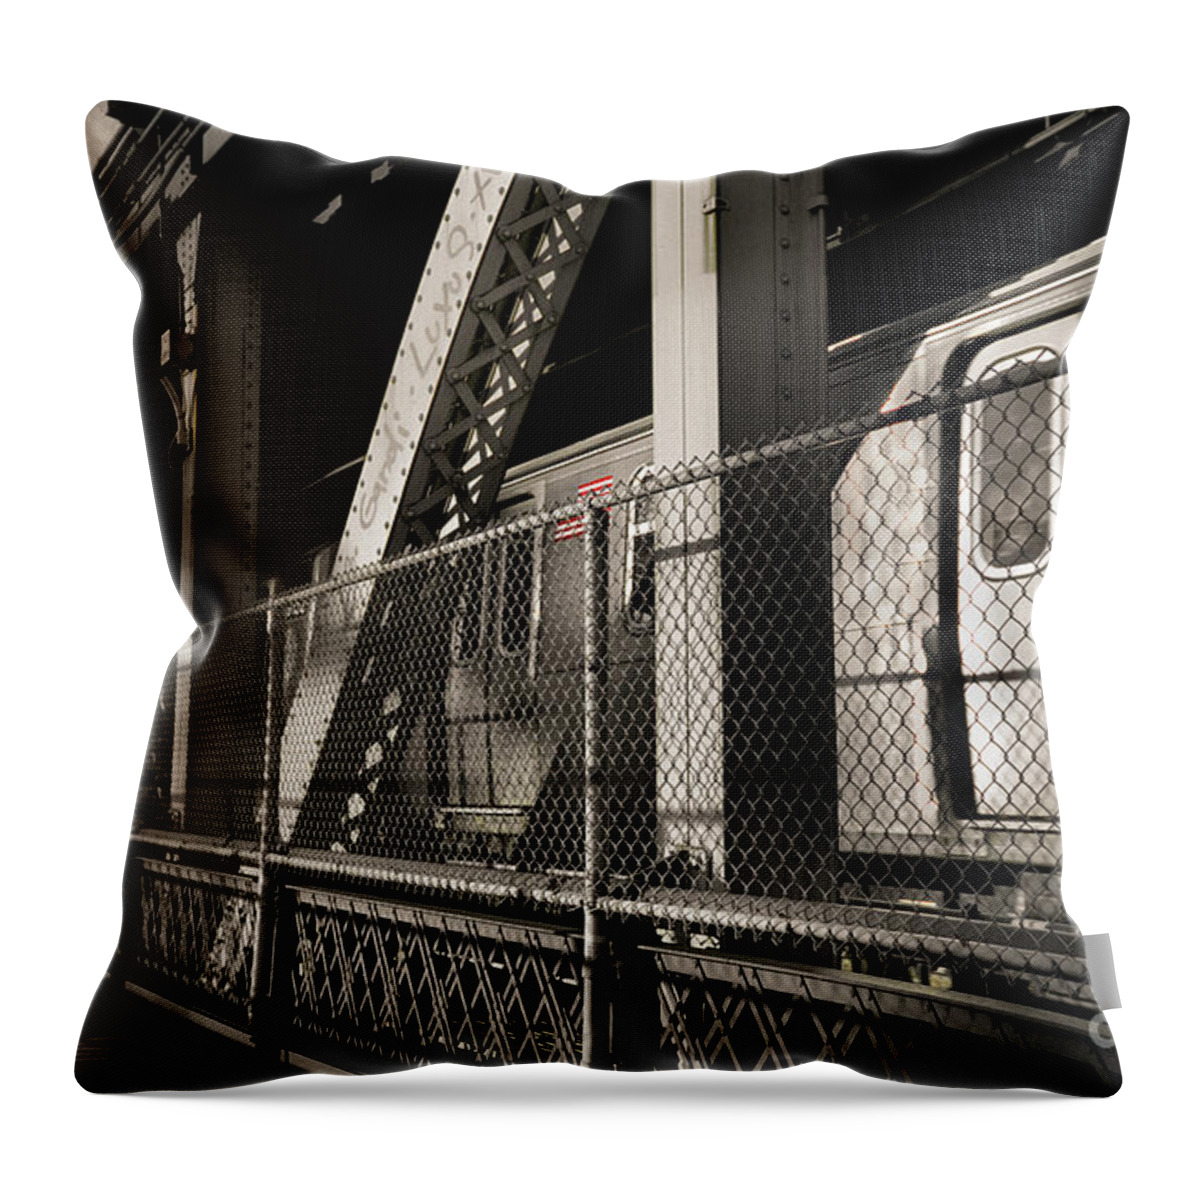 Subway Train Throw Pillow featuring the photograph Brooklyn-bound on the Manhattan Bridge by Steve Ember